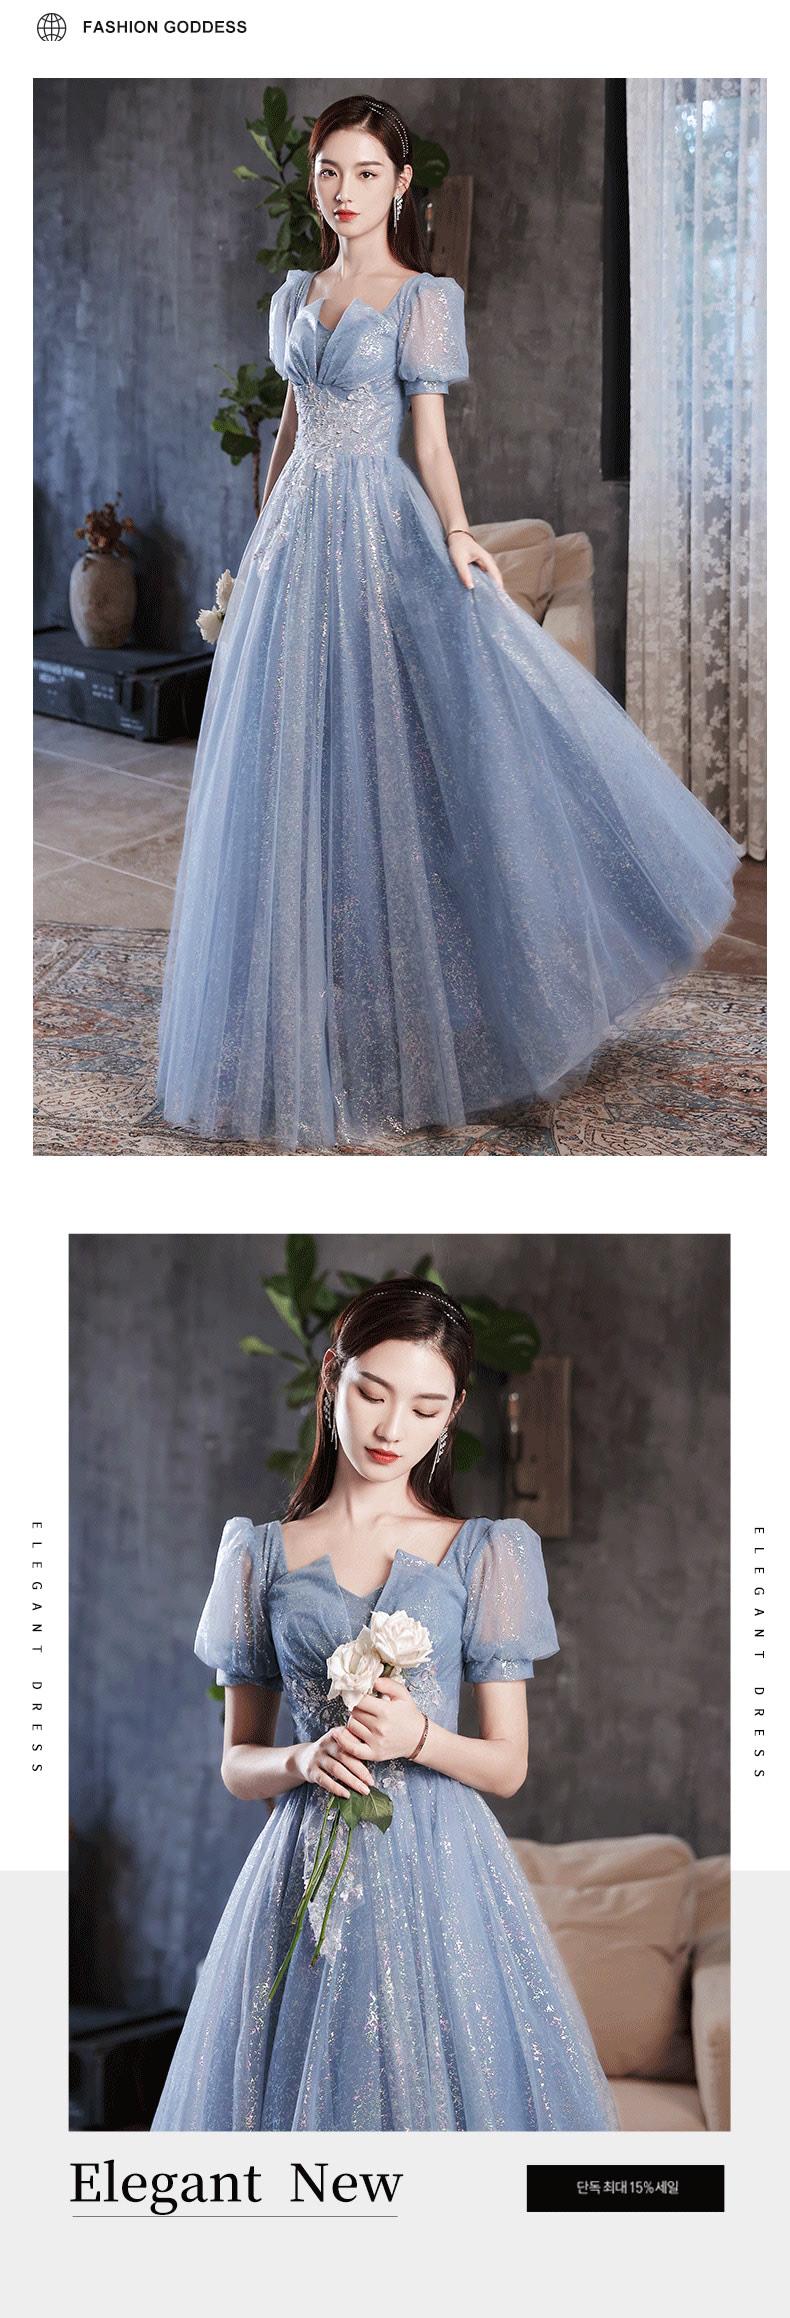 Short Sleeve Blue Formal Dress Evening Party Long Ball Gown11